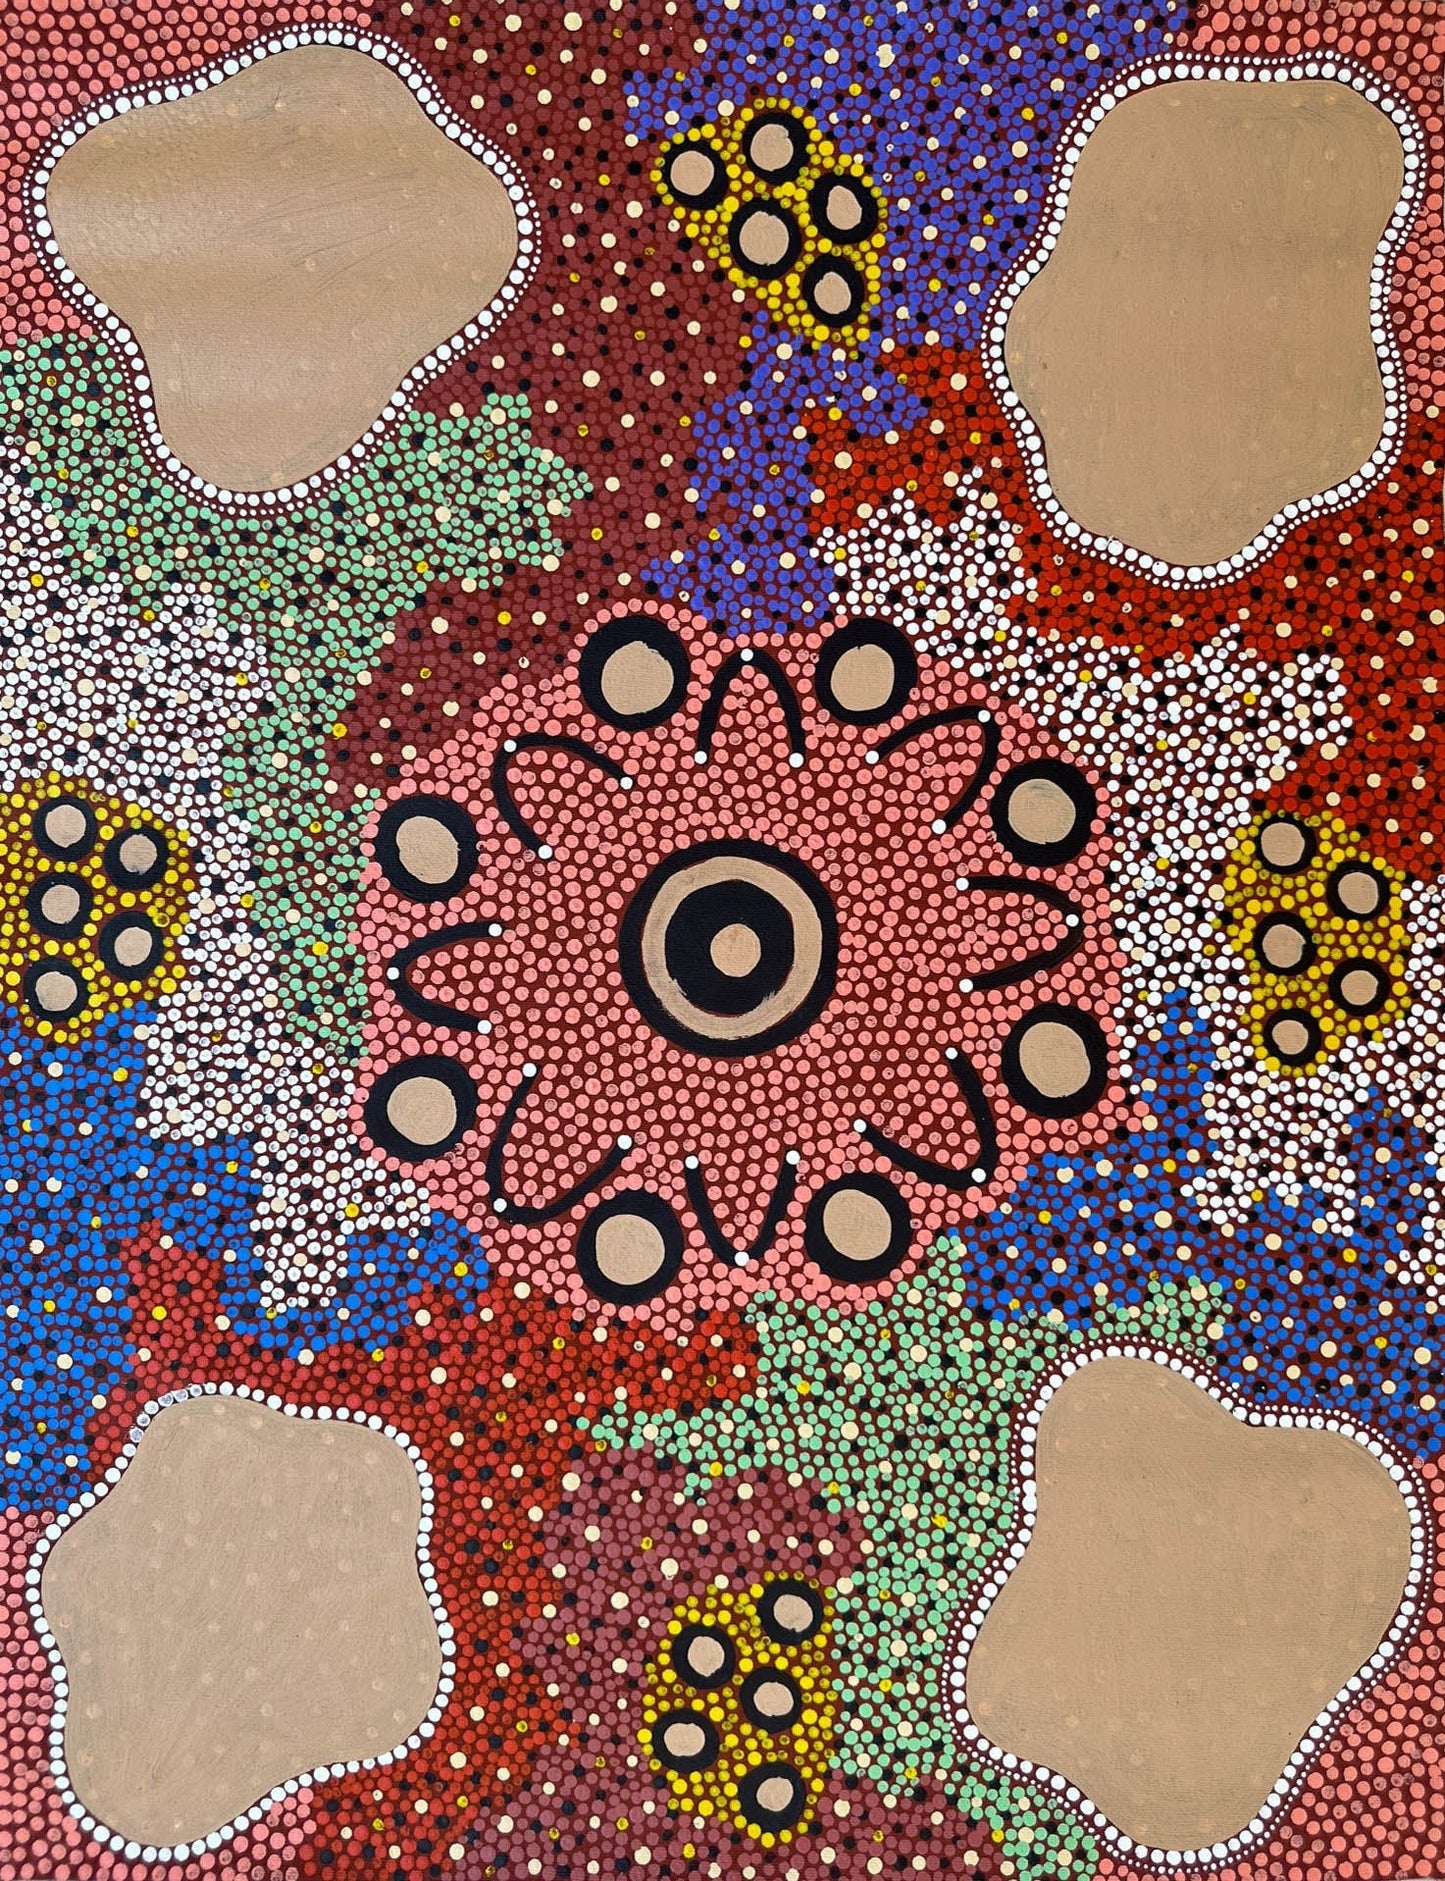 Patsy Ross + Indigenous Art + Aboriginal Art + Australian Art + Darwin Based Gallery + Dot Art Painting + Contemporary + Traditional Art + Iconography + Symbolism